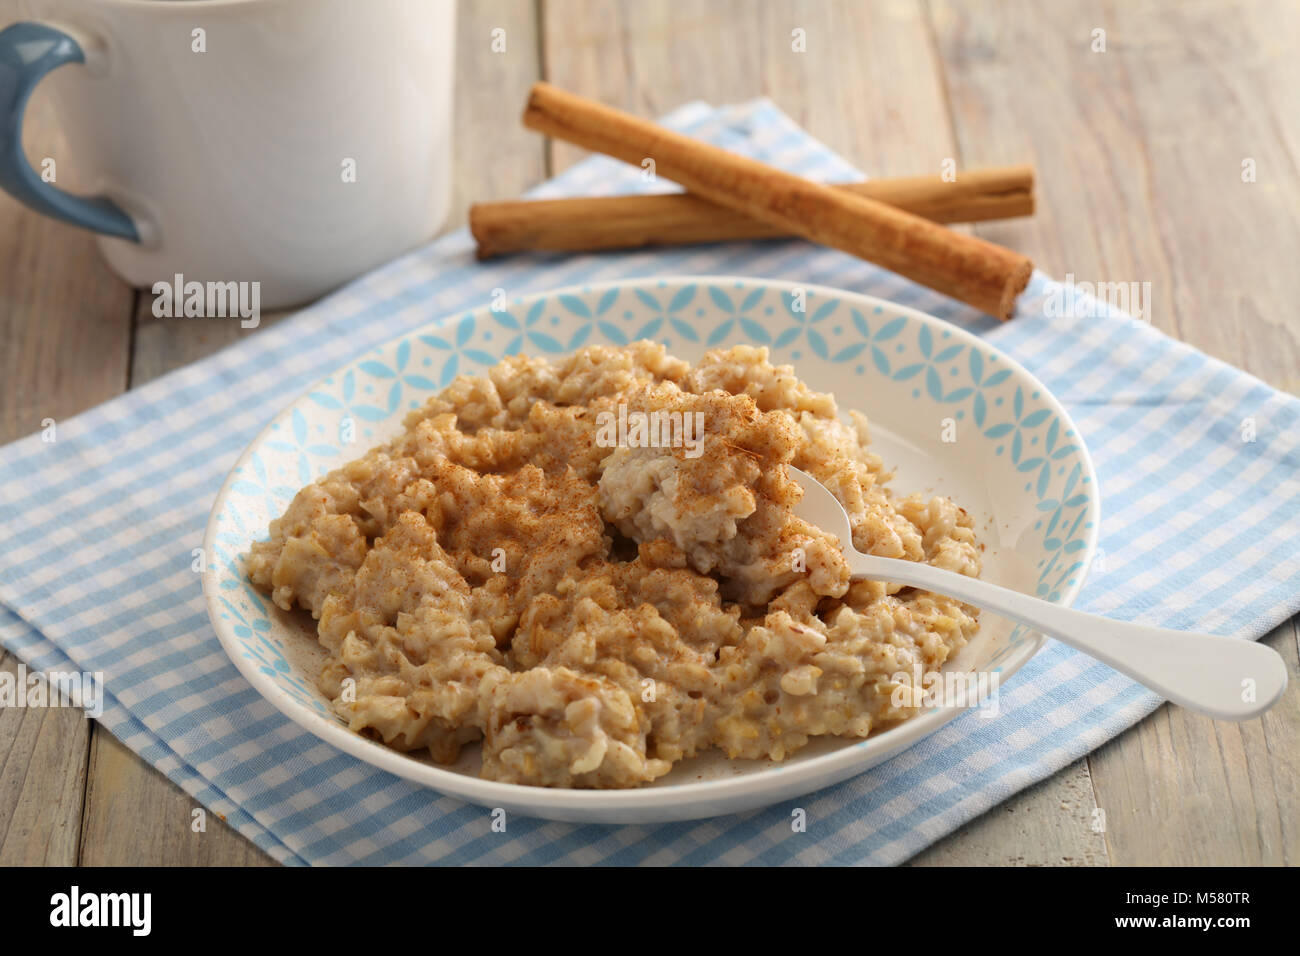 Oatmeal porridge with powdered cinnamon and cinnamon sticks Stock Photo